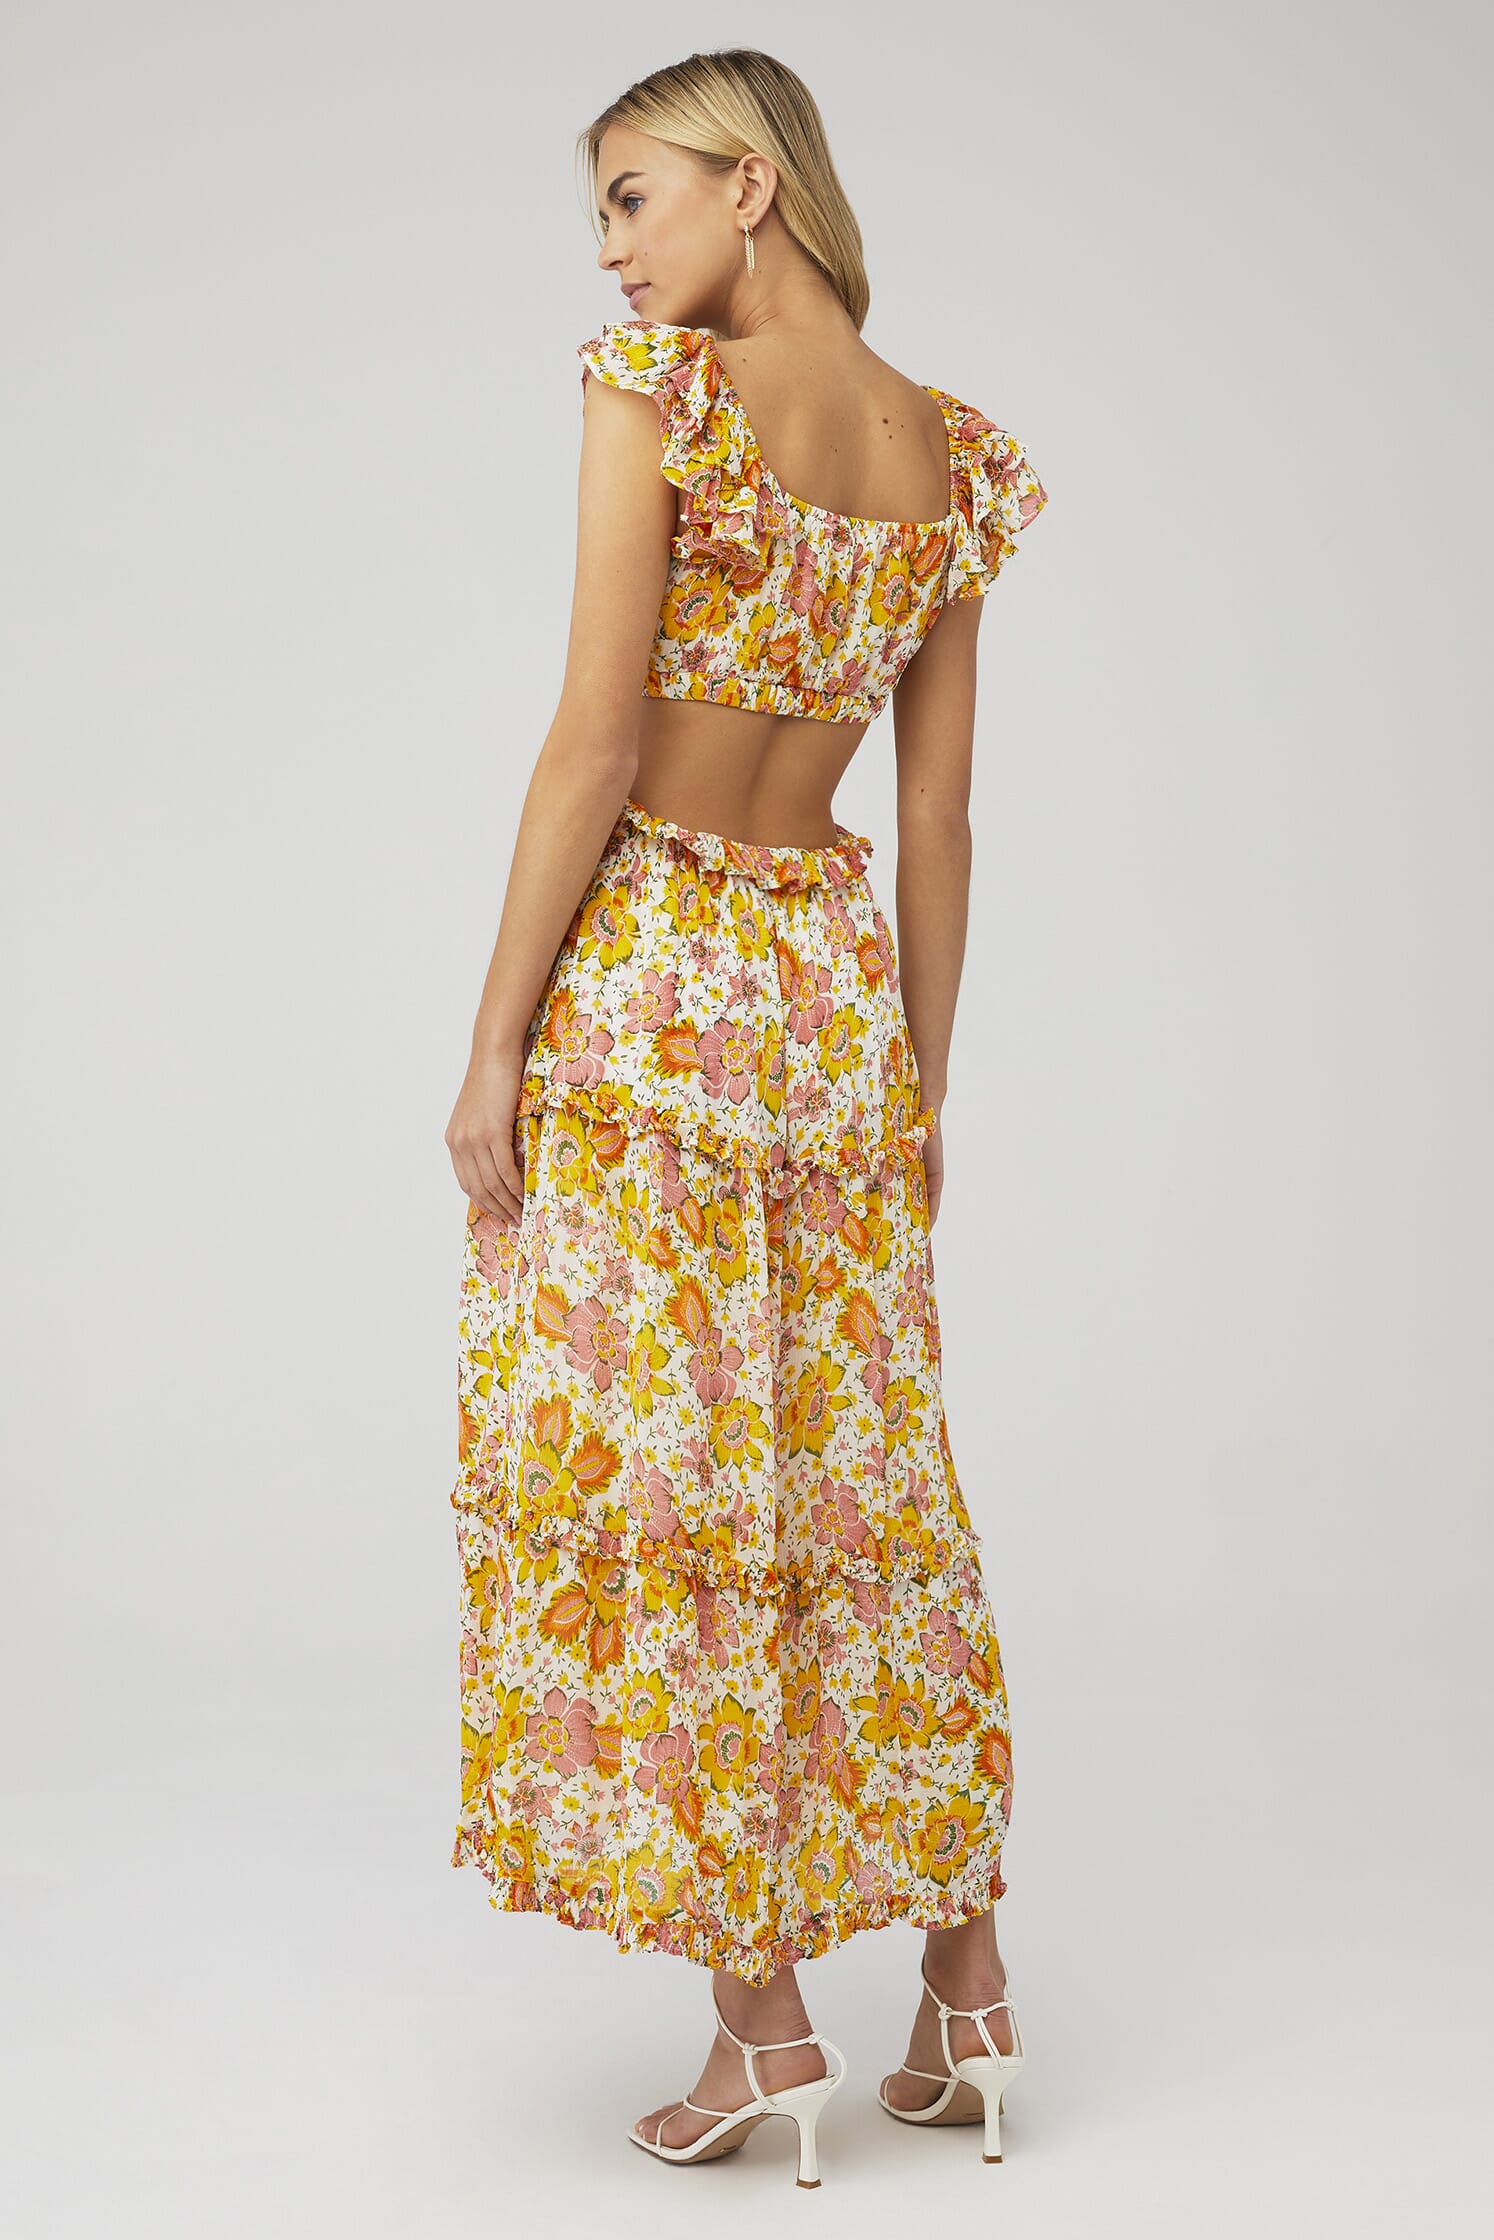 Cleobella | Clara Ankle Dress in Lucia Floral Print| FashionPass